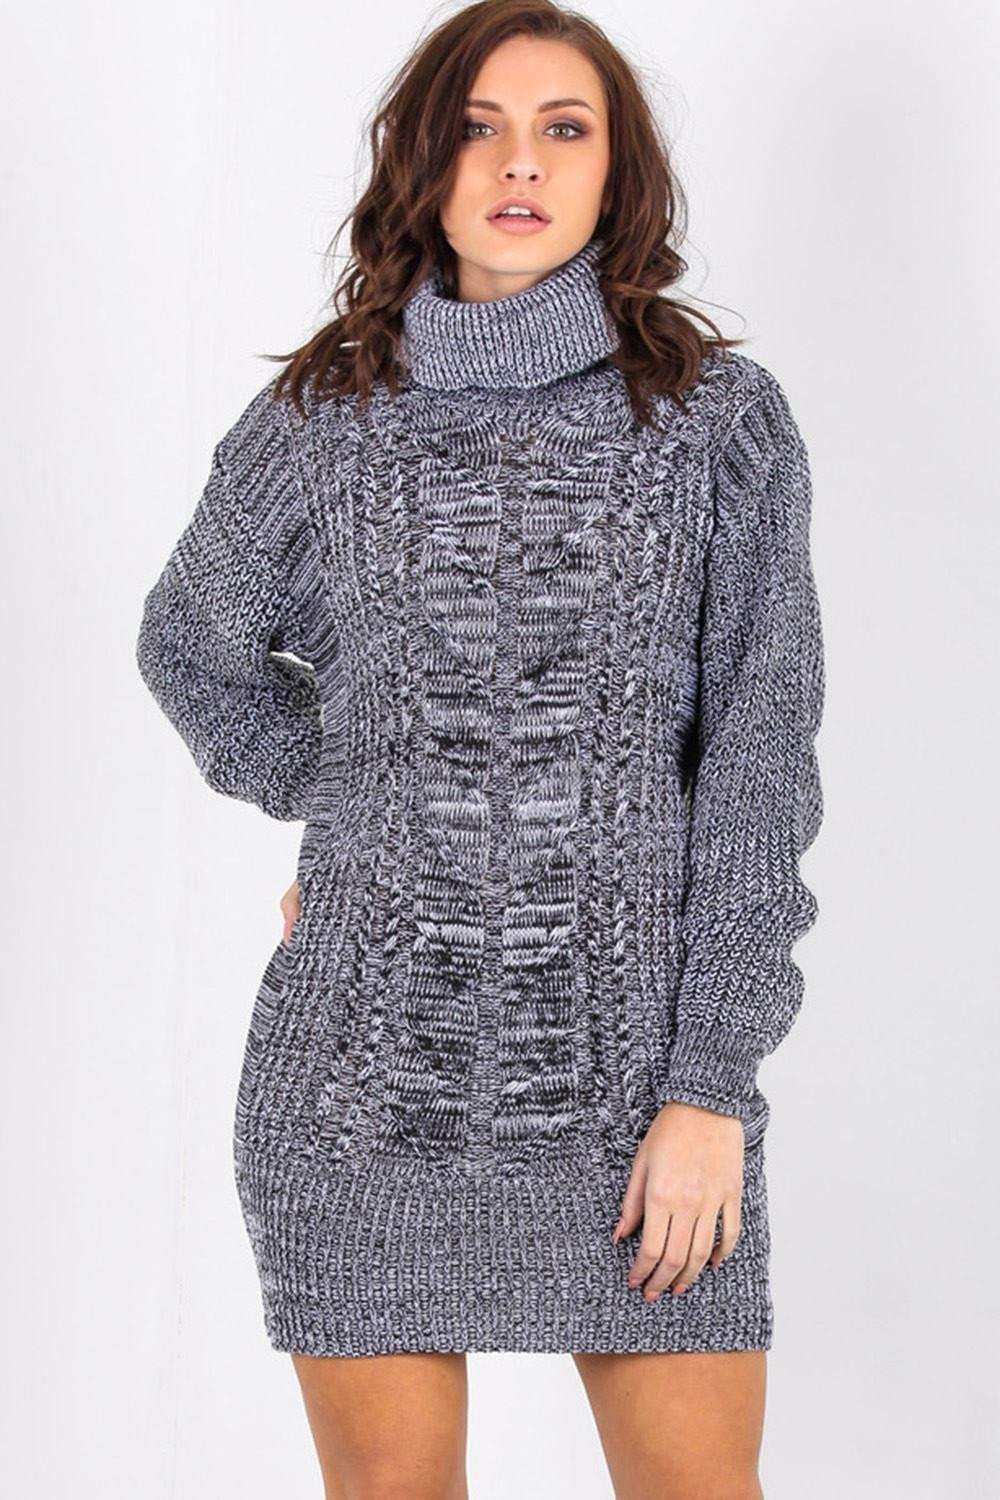 Elouise Roll Neck Knitted Jumper Dress - bejealous-com